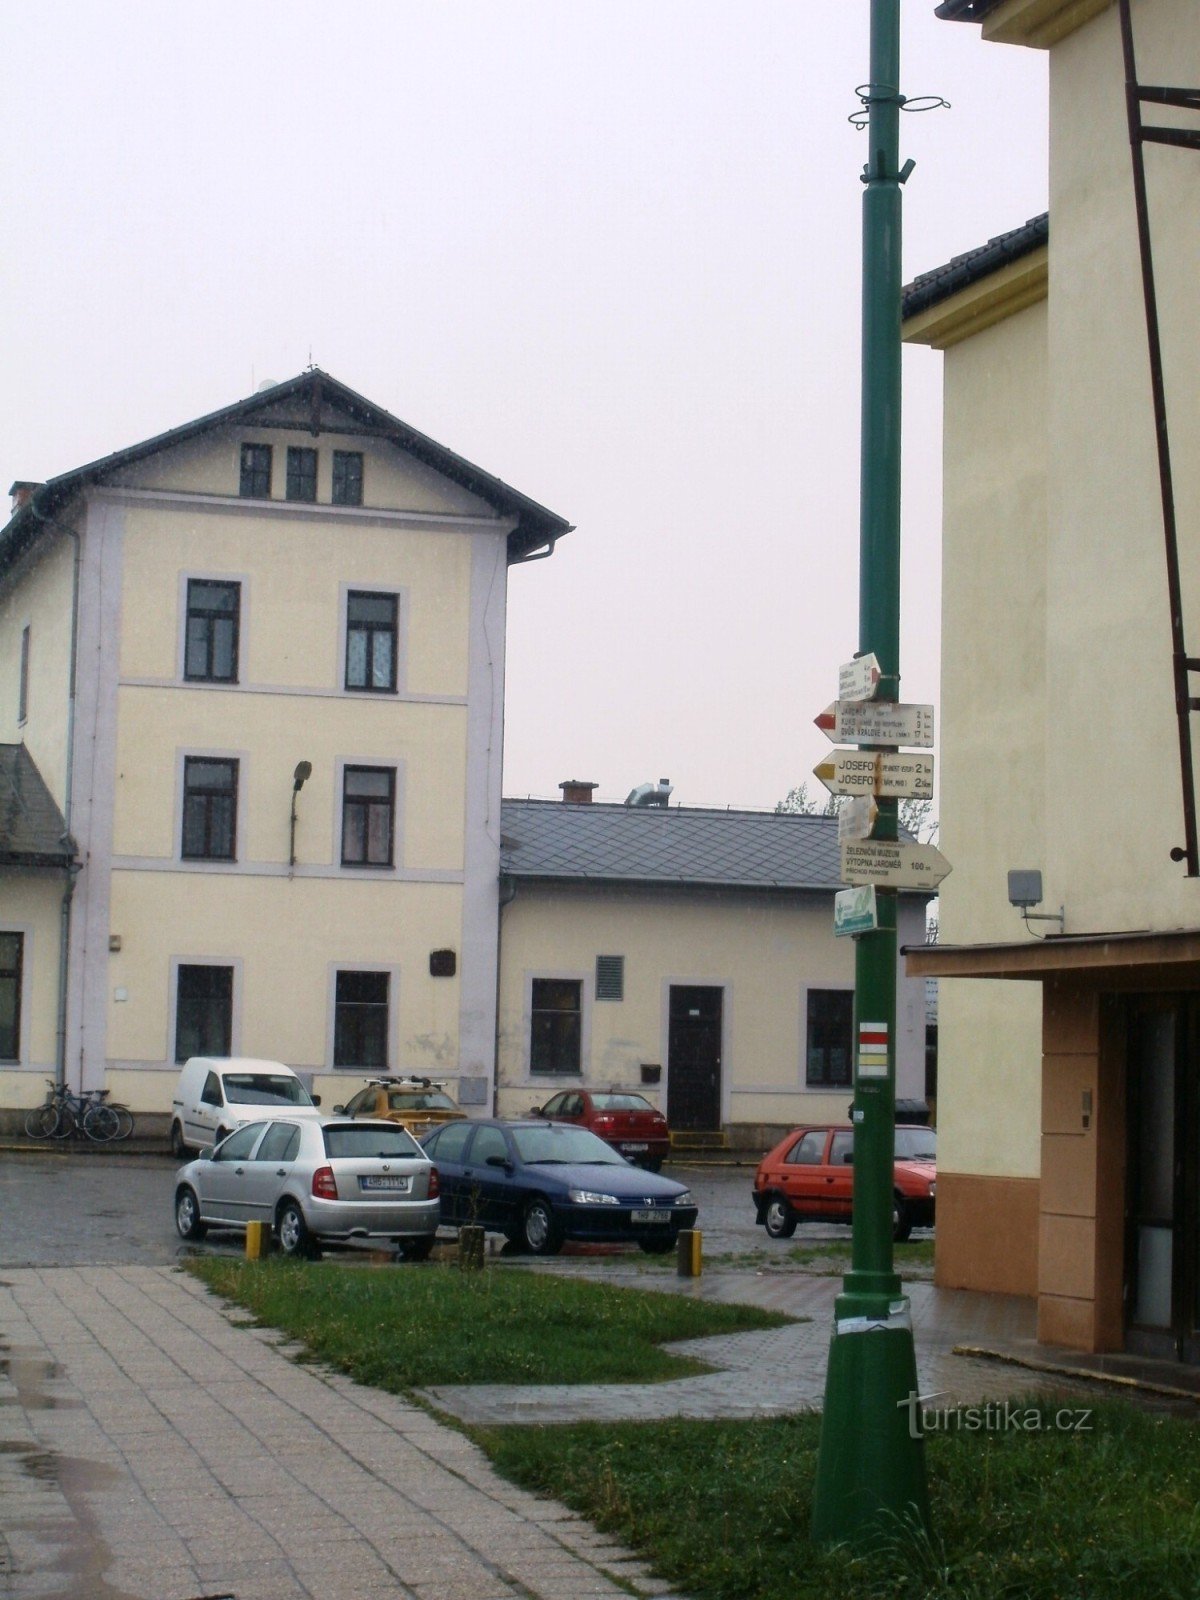 encruzilhada turística Jaroměř - ferrovia, estação ferroviária